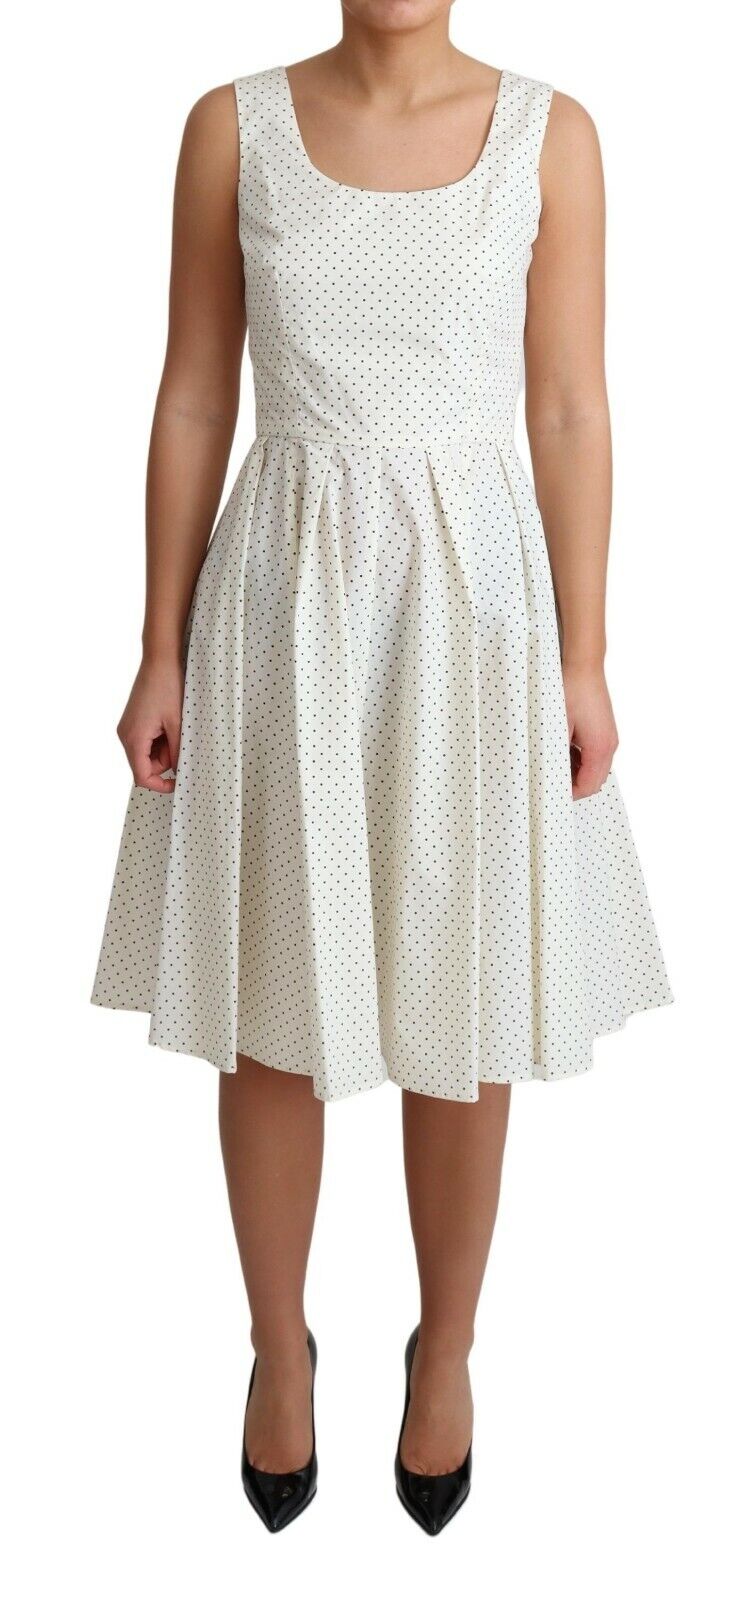 Elegant Sleeveless A-Line Polka Dotted Dress